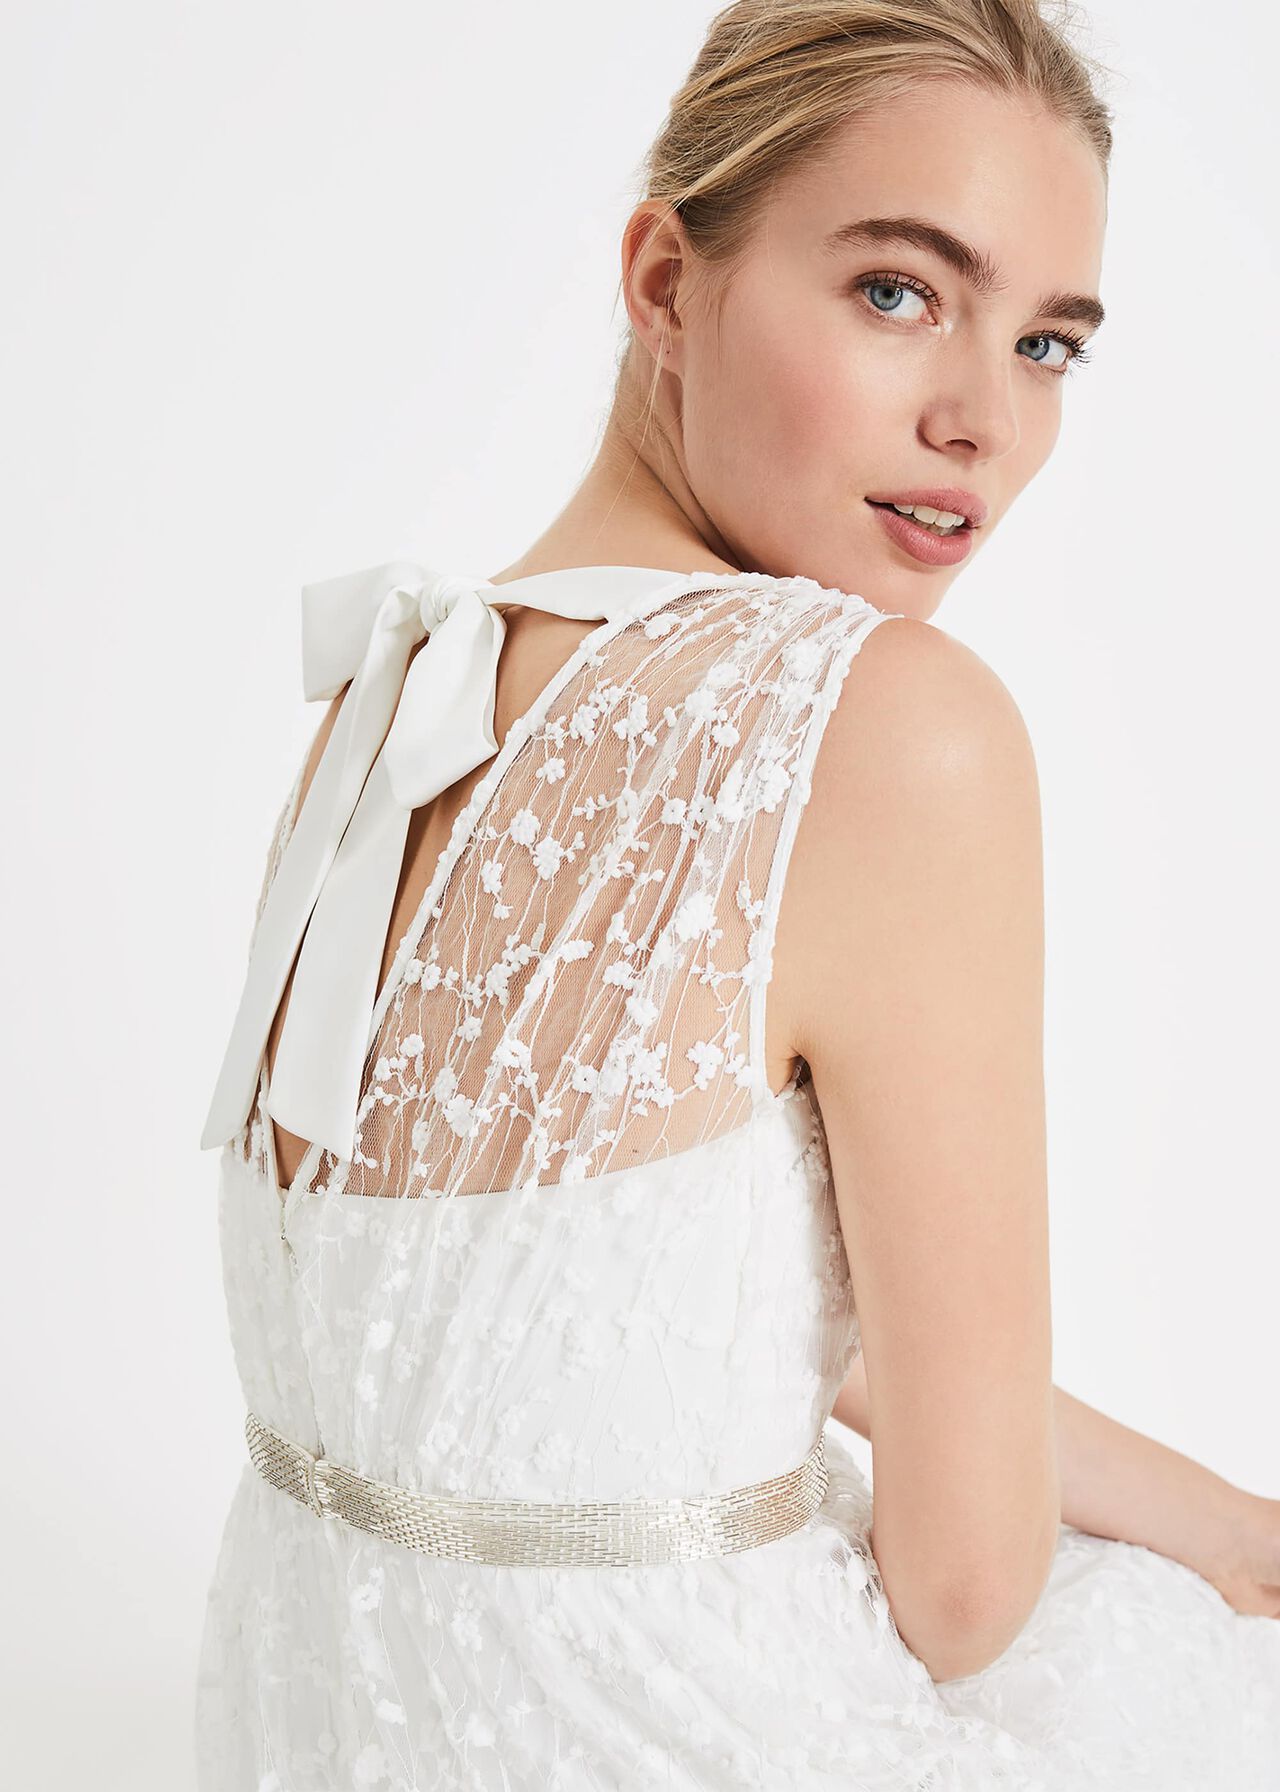 Amalia Embroidered Wedding Dress